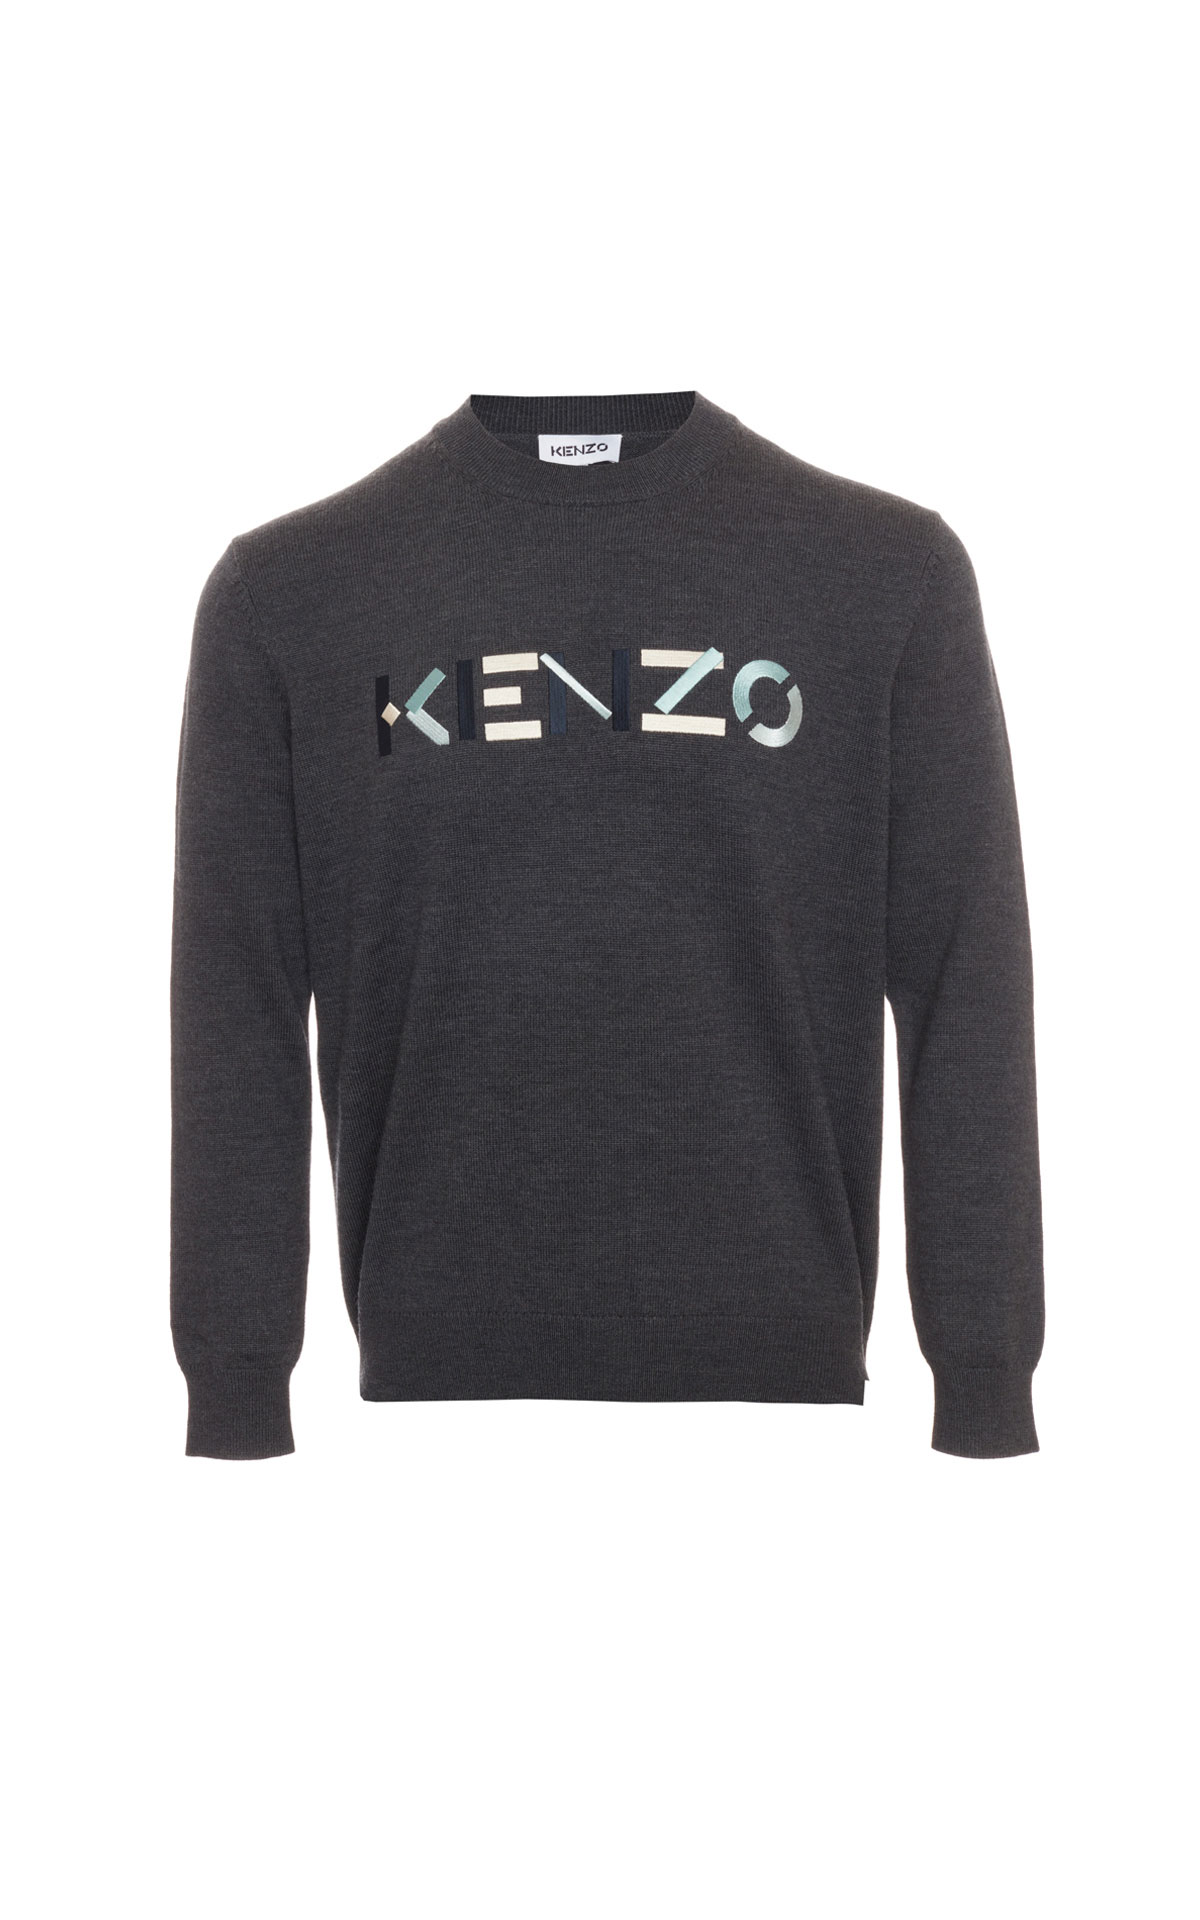 Kenzo Grey logo jumper from Bicester Village